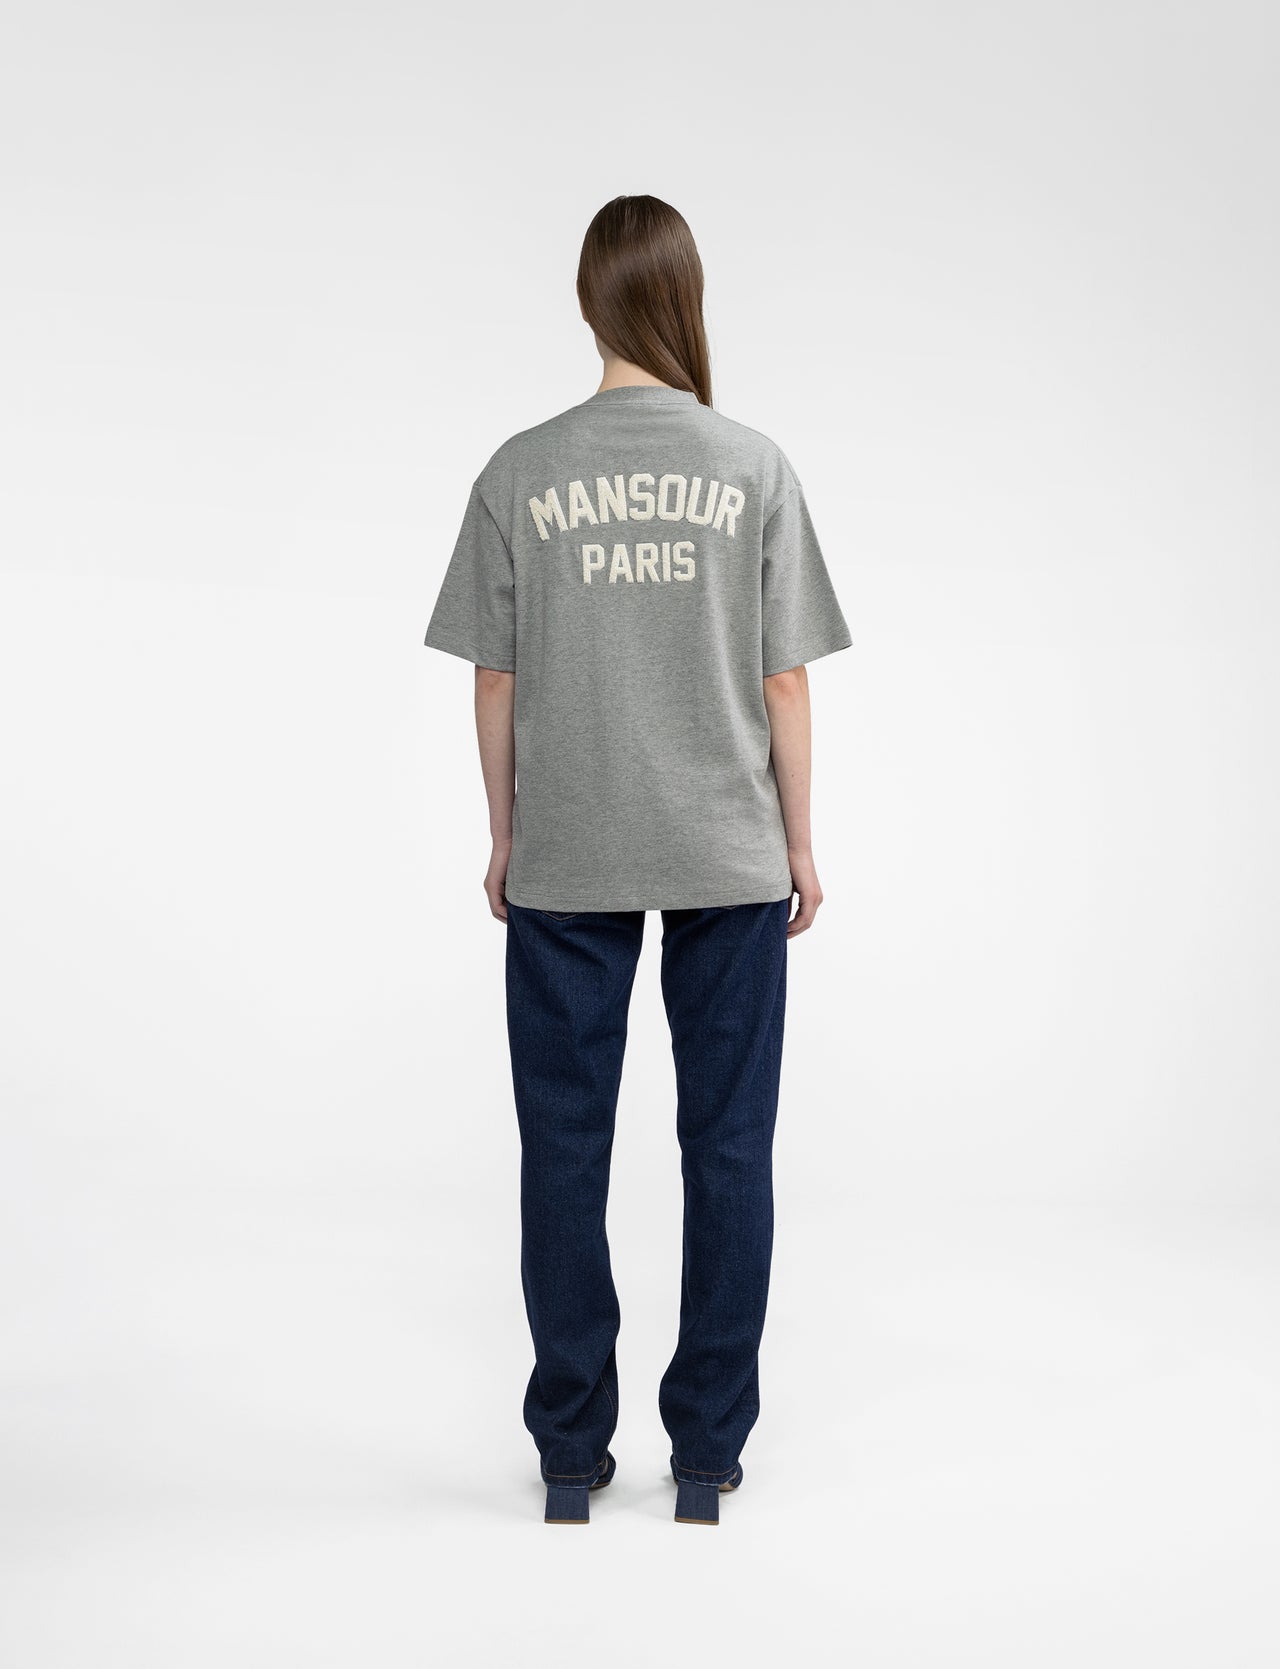 Paris College T-shirt grijs gemêleerd